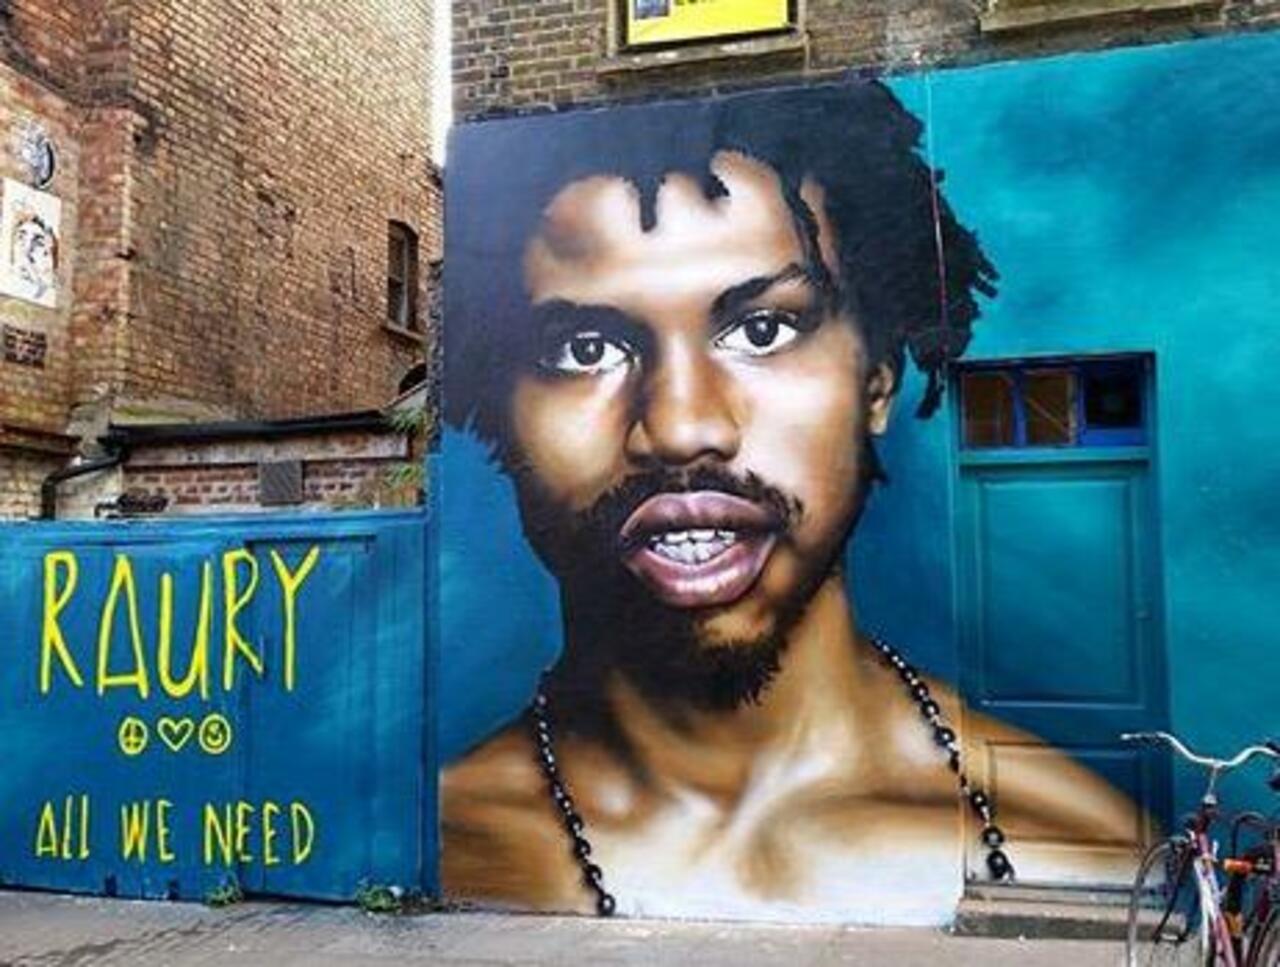 RT @GoogleStreetArt: New Street Art of @Raury by Olliver Switch in Brick Lane 

#art #graffiti #mural #streetart http://t.co/WgbTQT2ffp